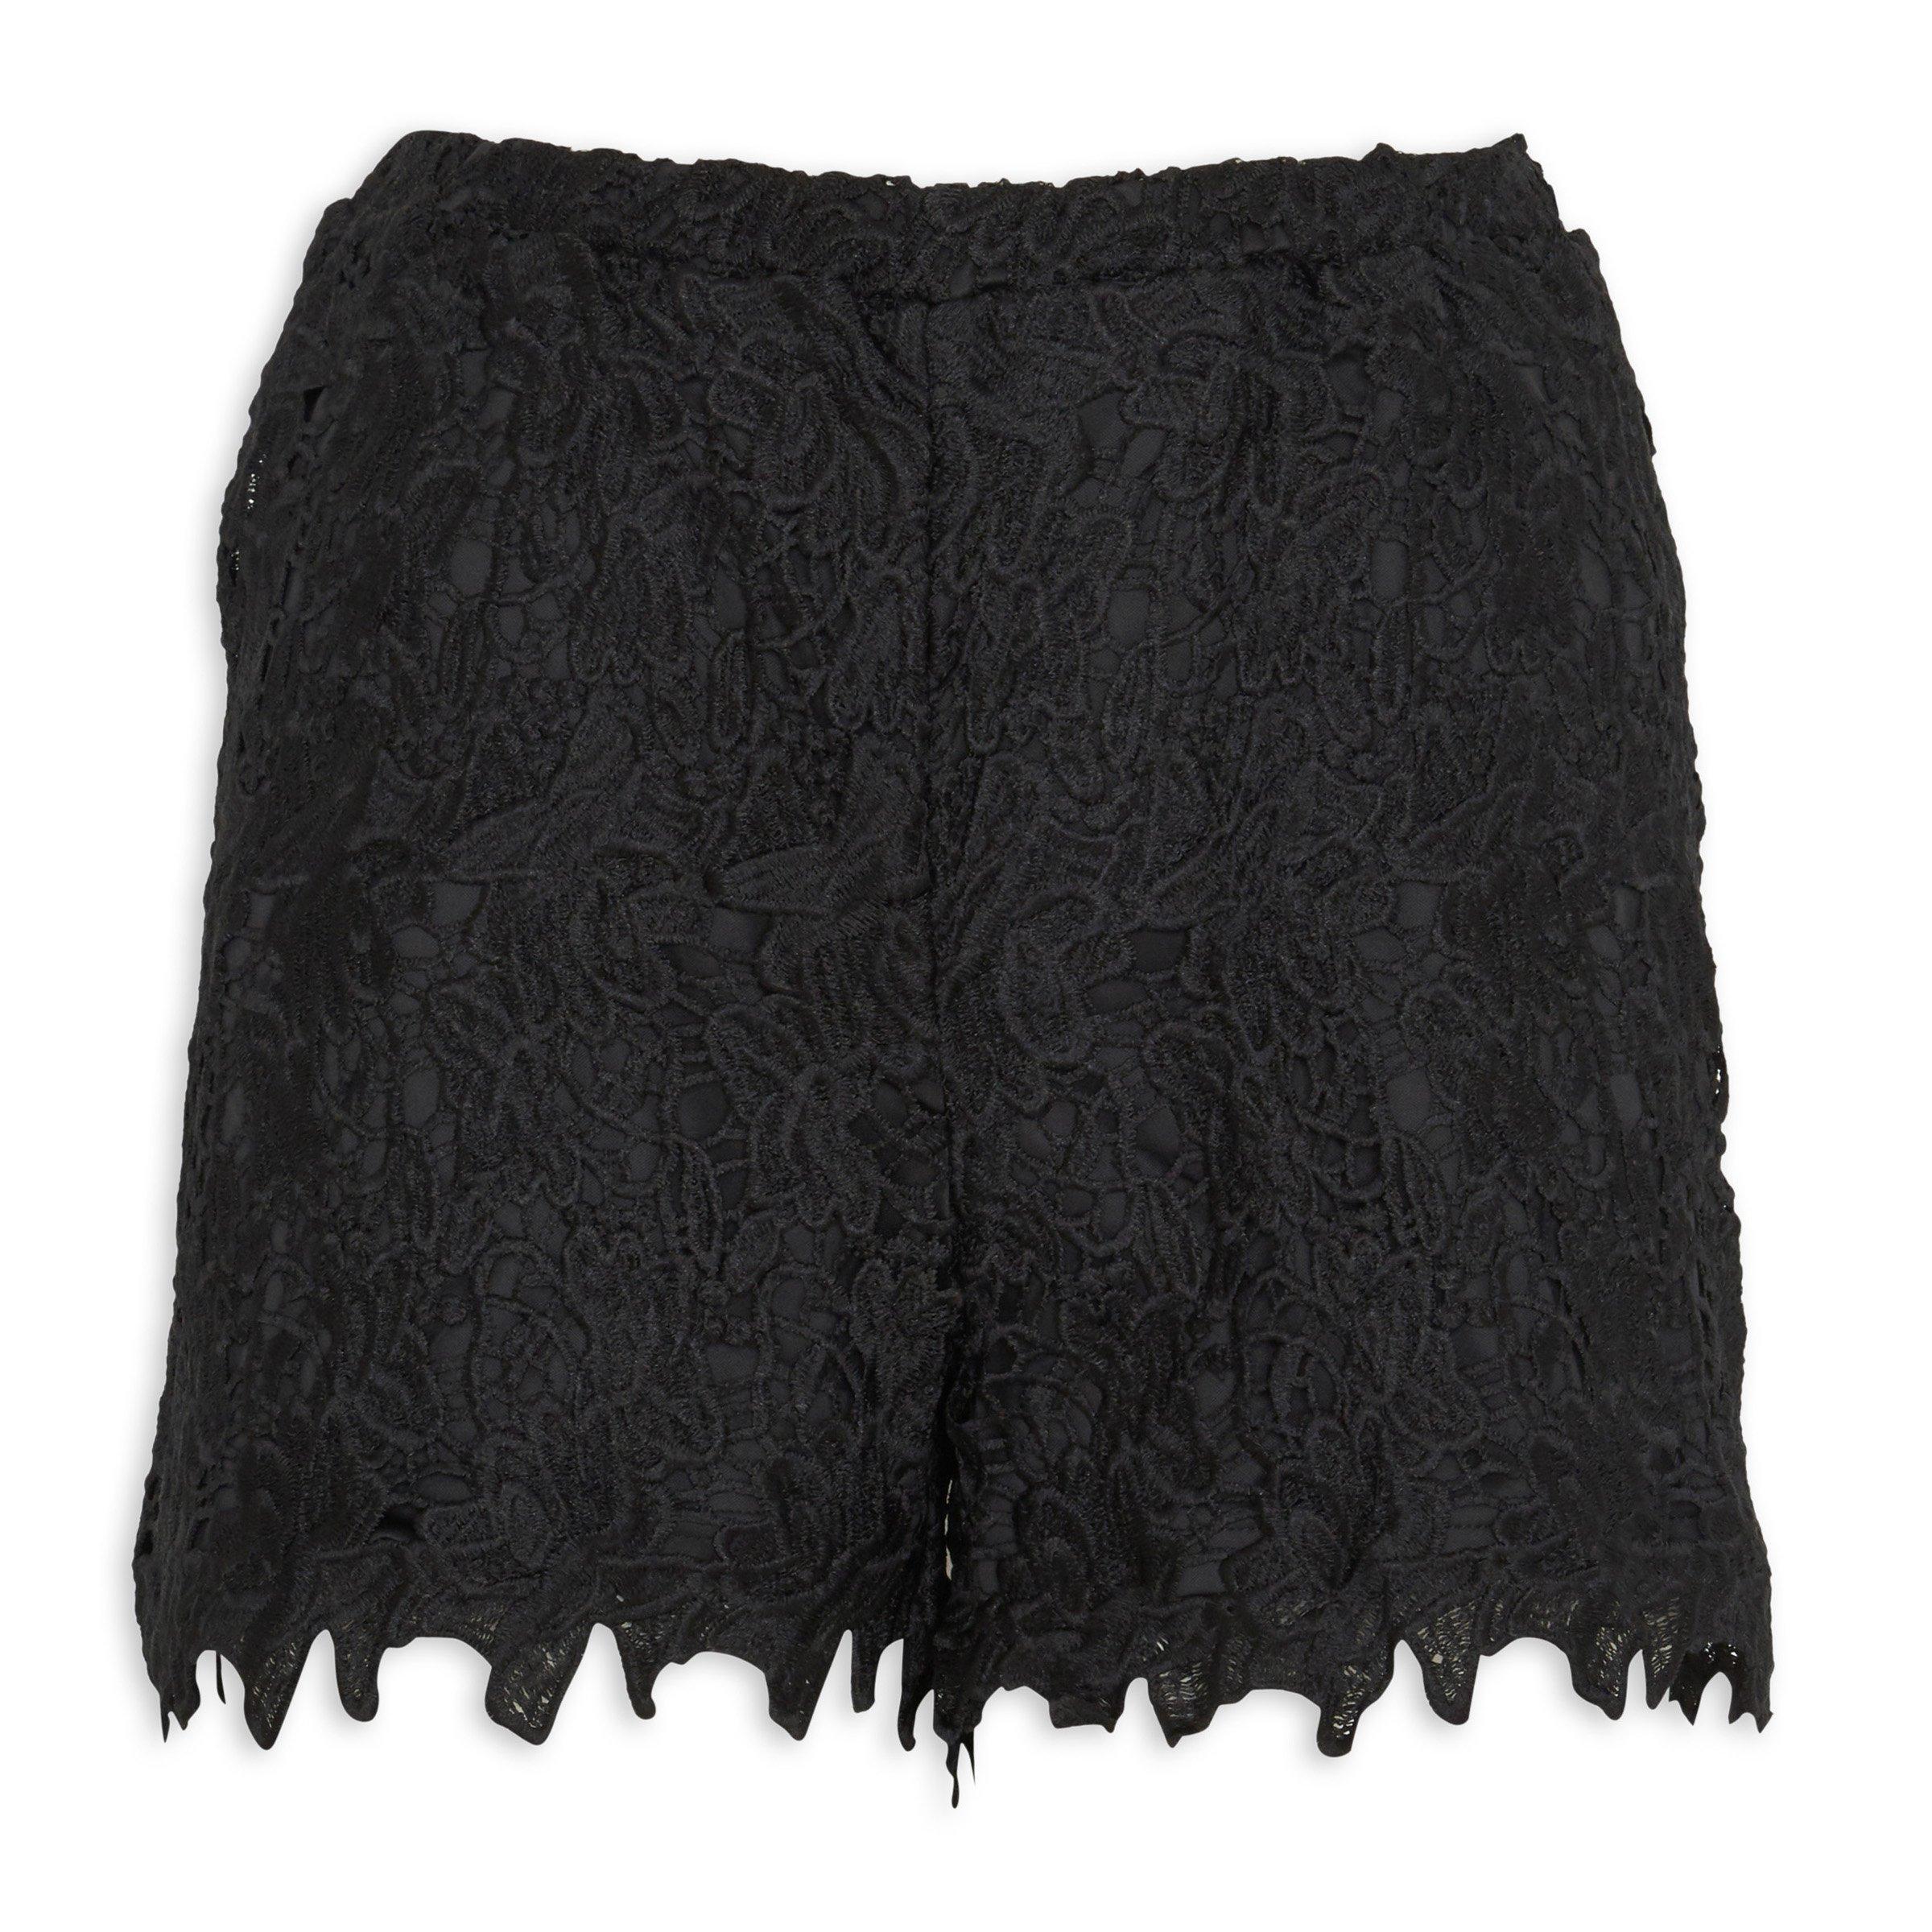 Lace shorts Woman, Black